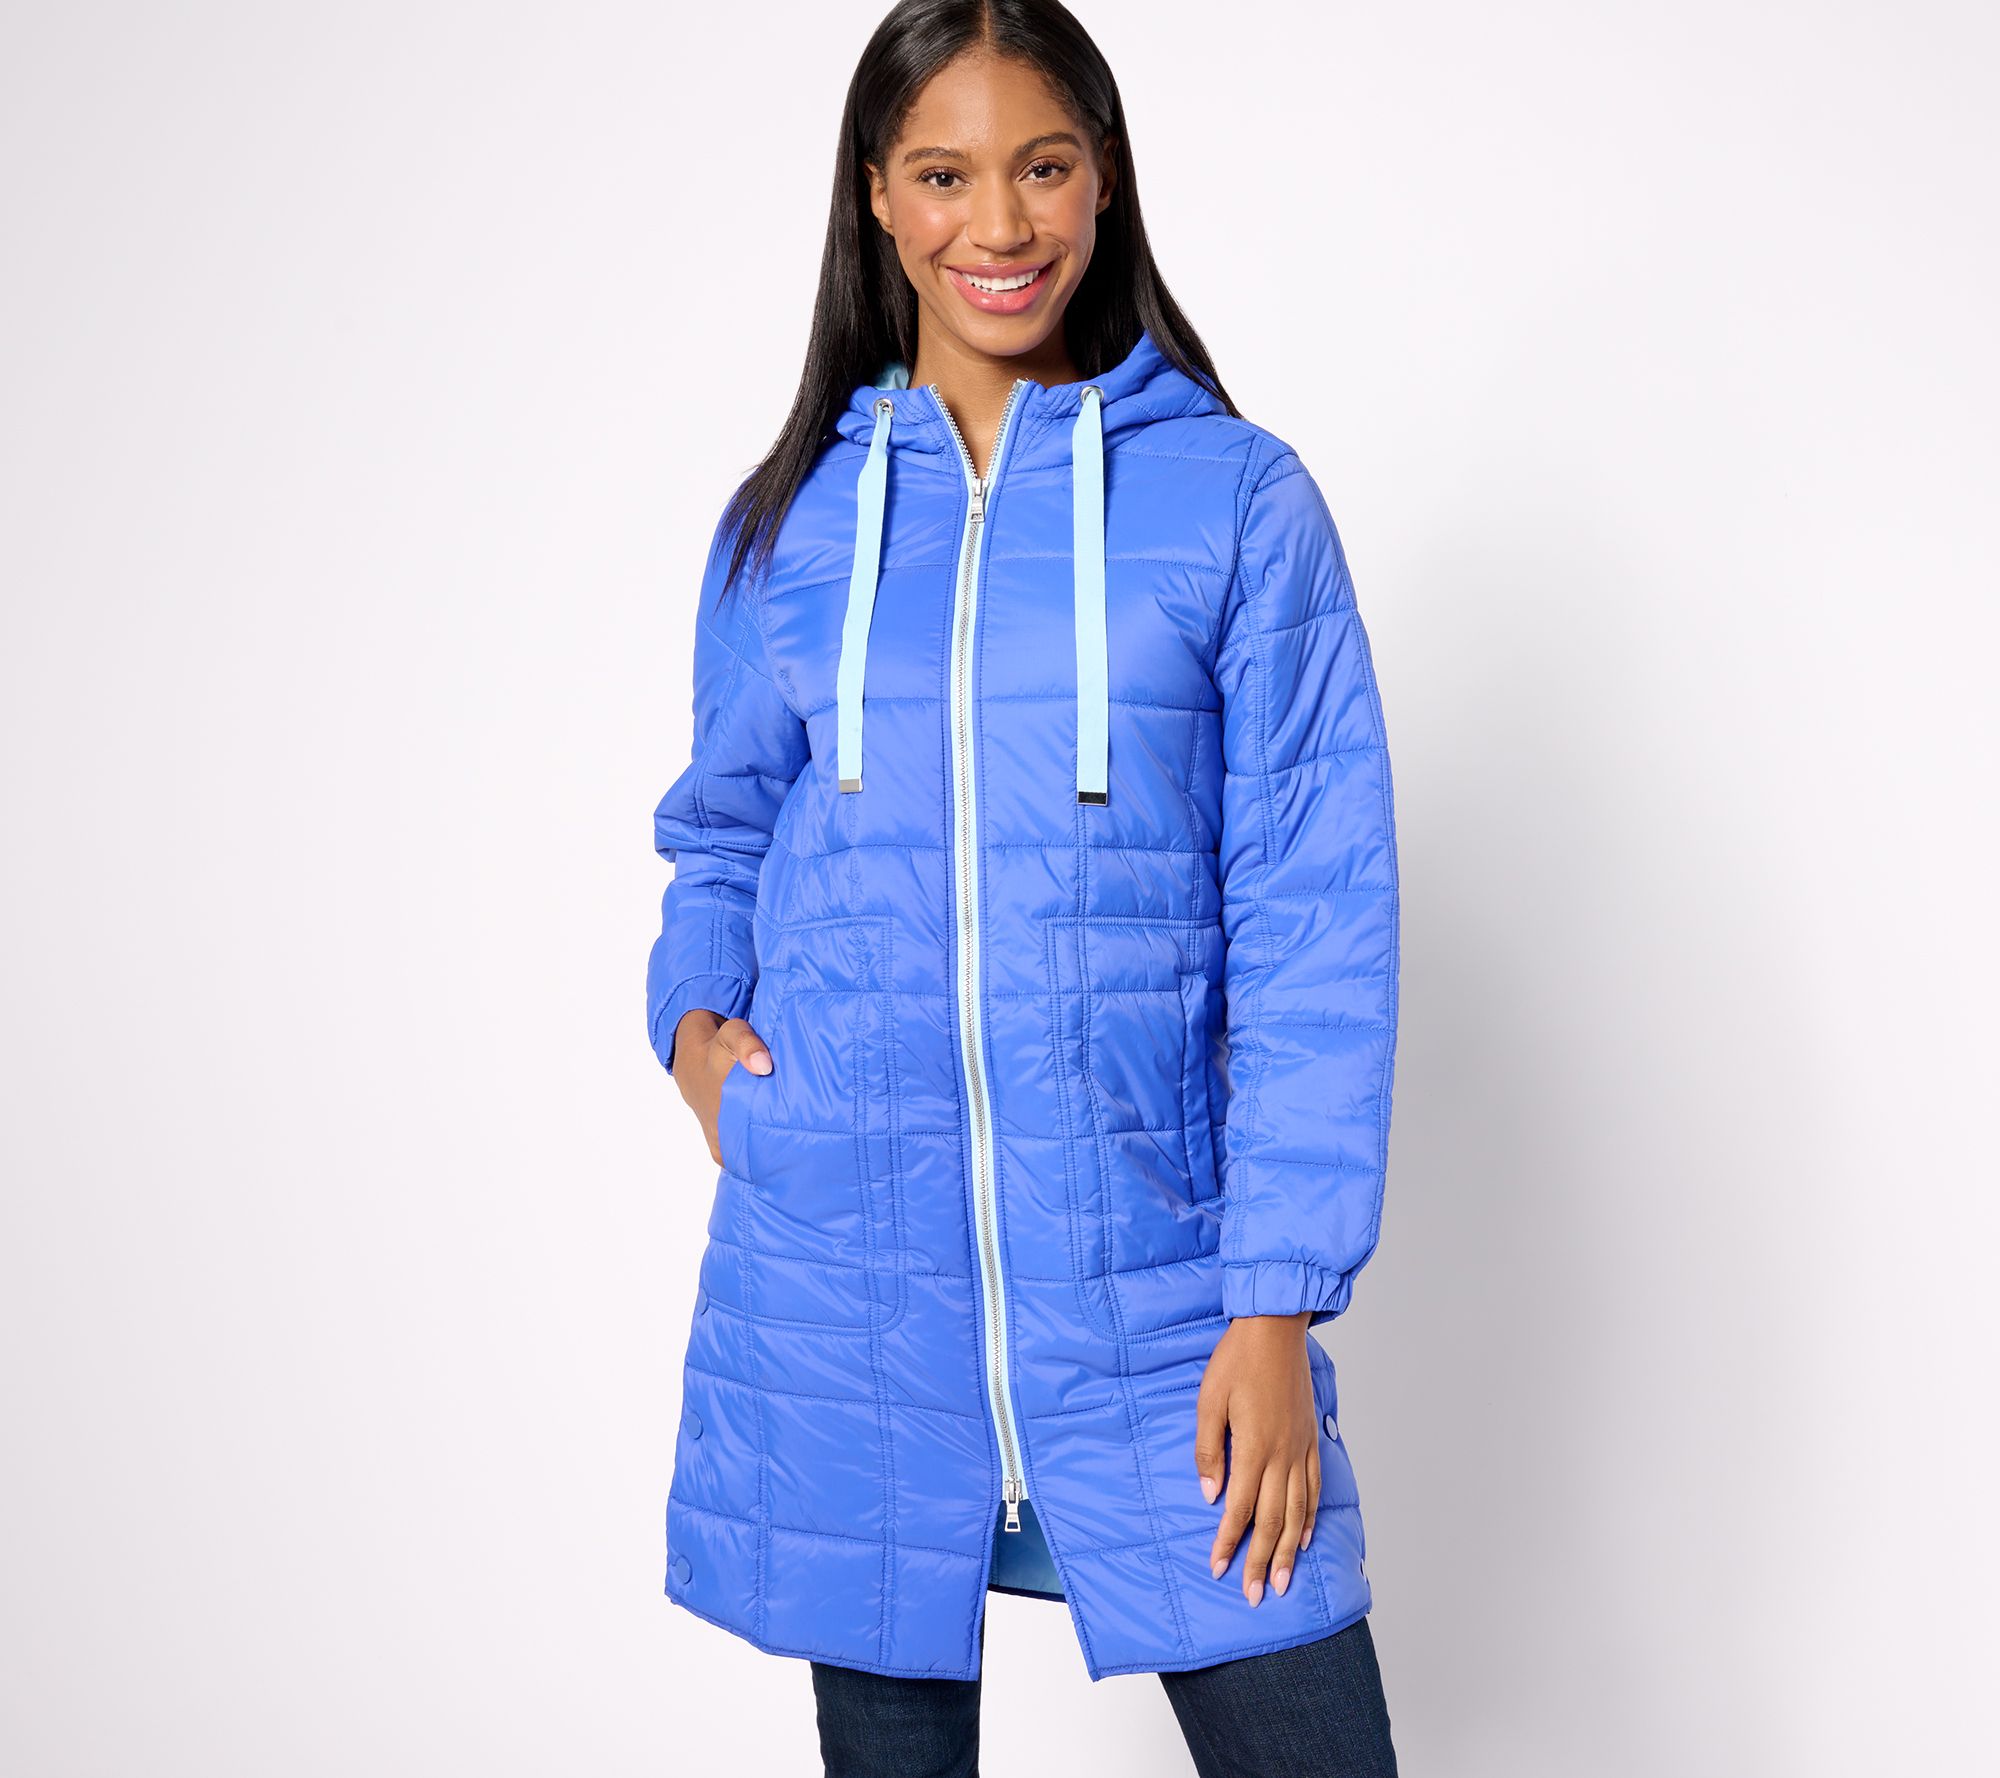 Clothing & Shoes - Jackets & Coats - Lightweight Jackets - Nuage Mix Media  Jacket - Online Shopping for Canadians